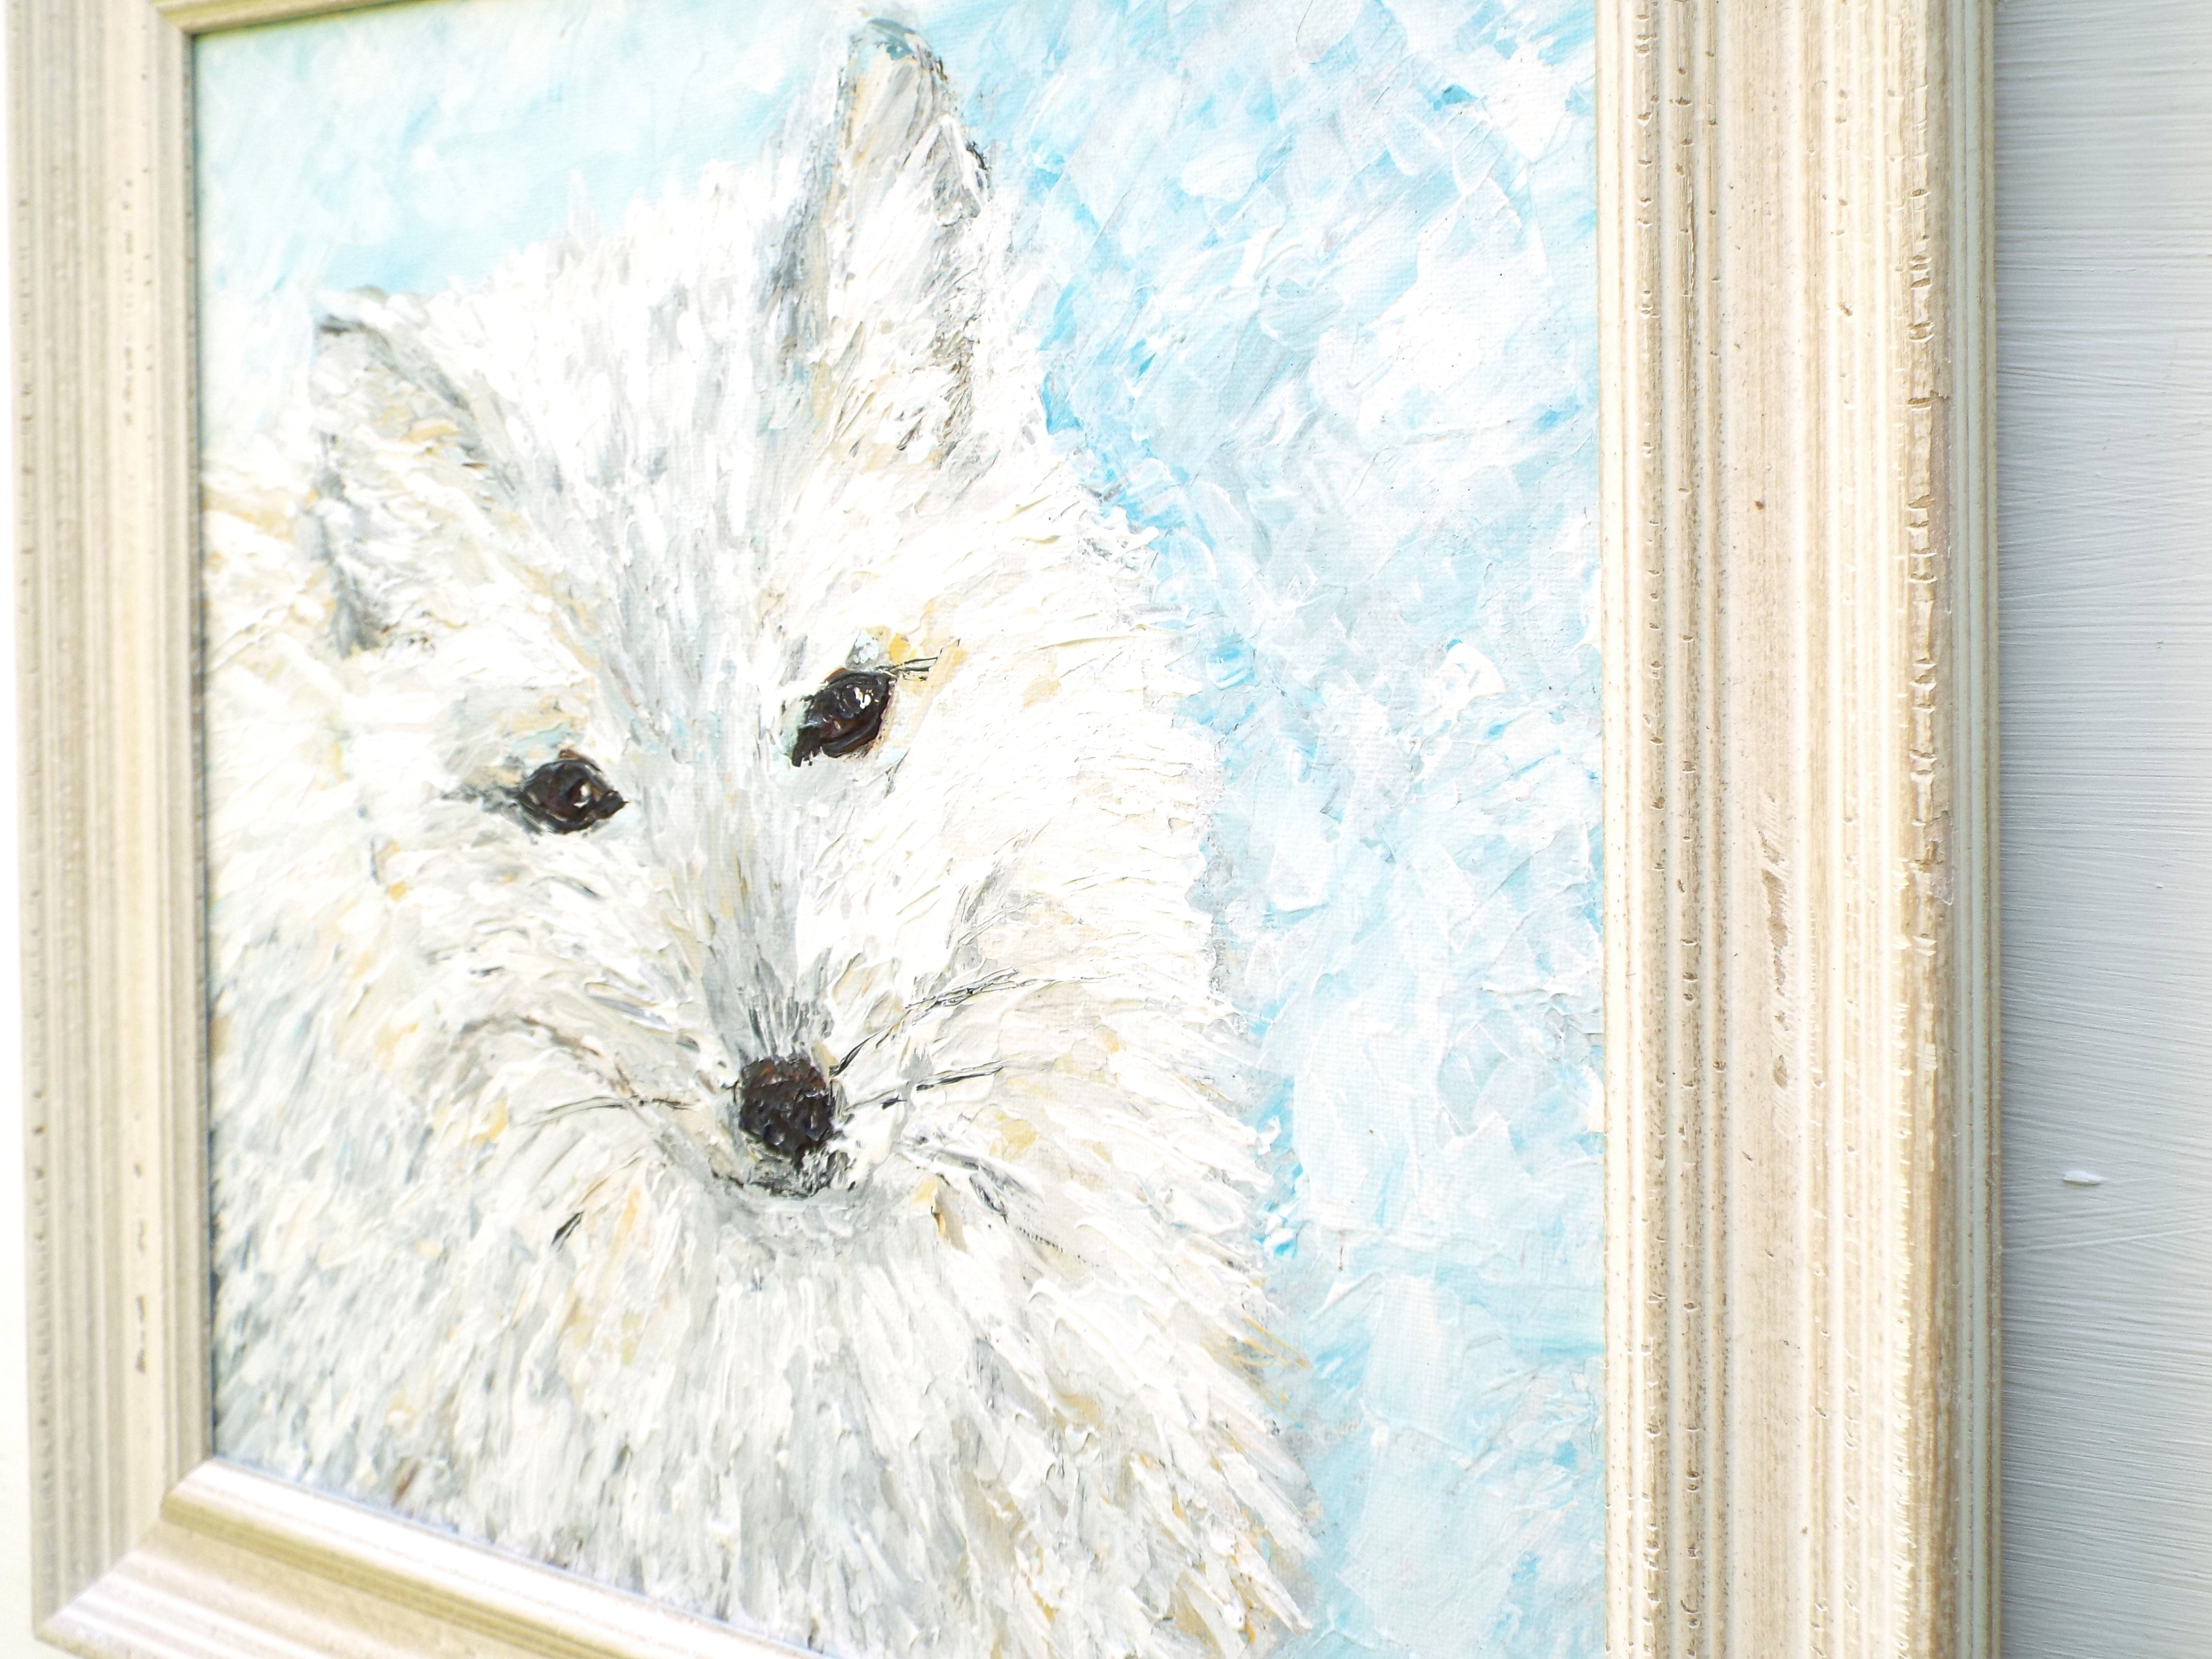 Arctic Fox Original Framed Wildlife Painting by Andi Lucas